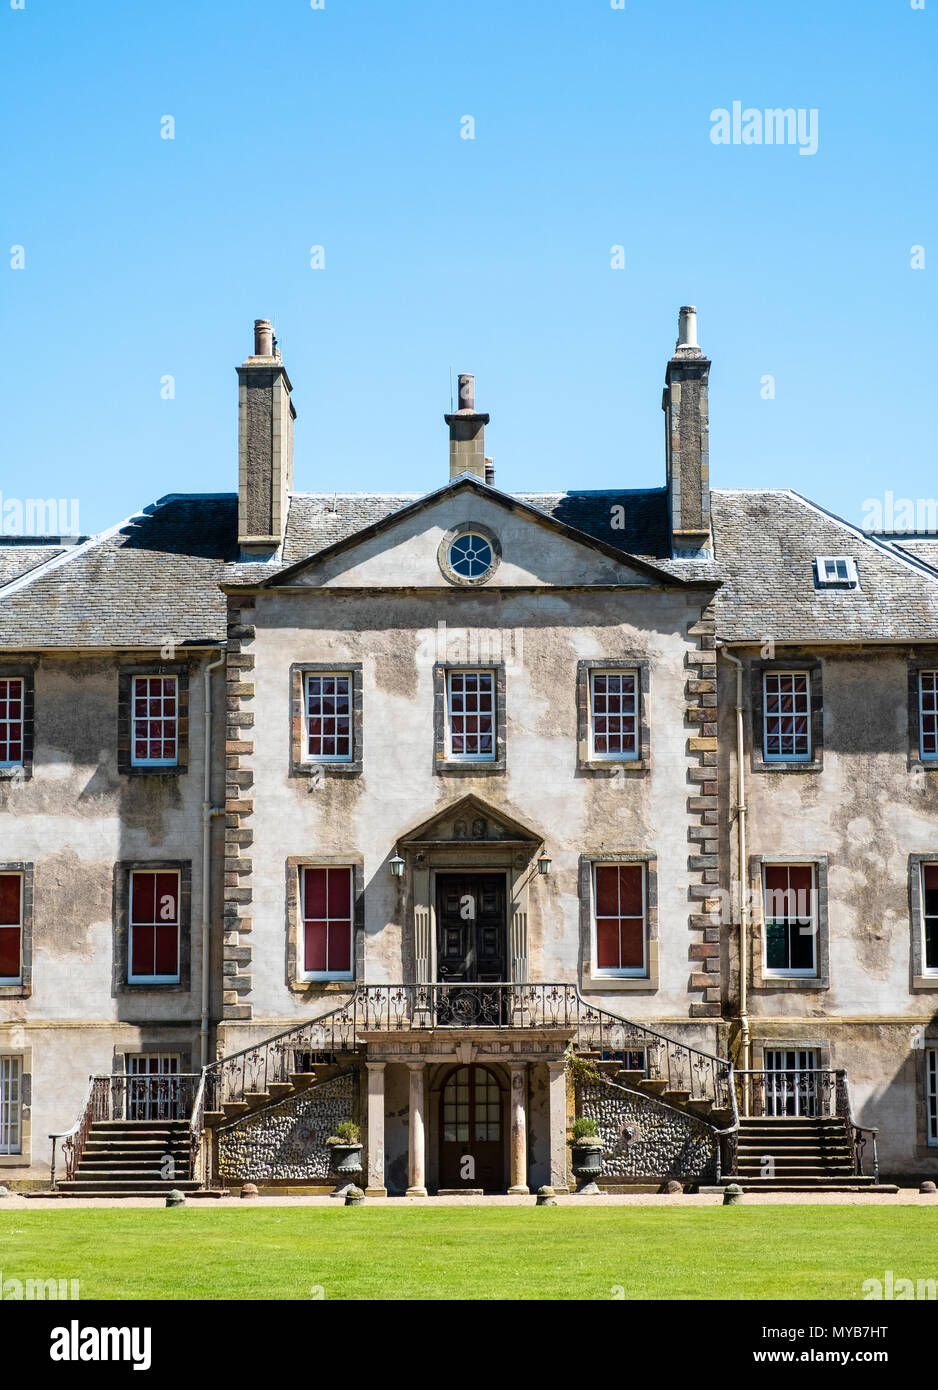 Newhailes House a Palladian style villa in Newhailes Estate. Midlothian, Scotland, UK Stock Photo